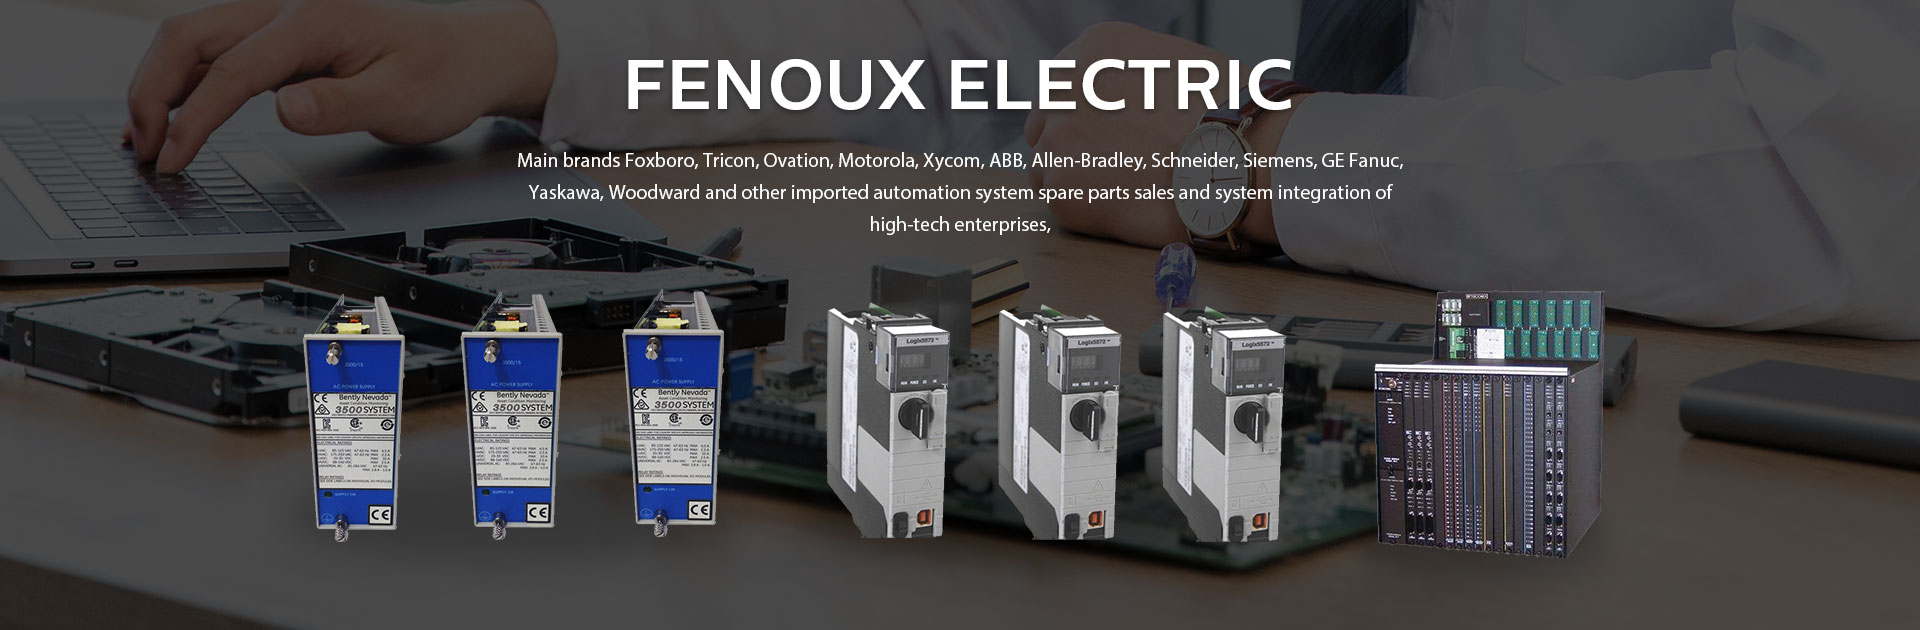 Fenoux Electric Co., Ltd.